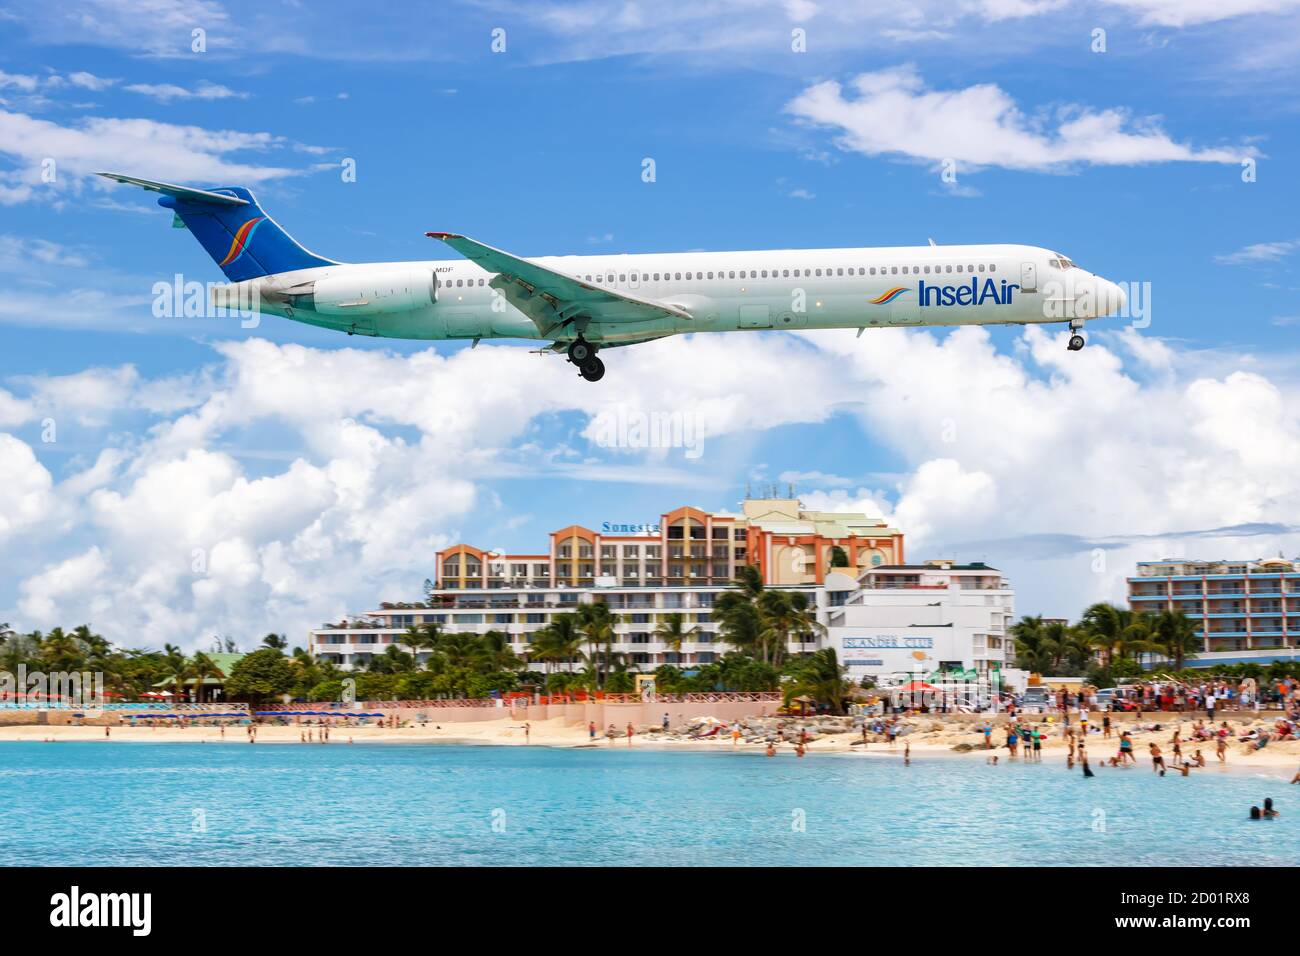 Sint Maarten, Antille Olandesi - 17 settembre 2016: Aereo Insel Air McDonnell Douglas MD-83 all'aeroporto di Sint Maarten, Antille Olandesi Foto Stock